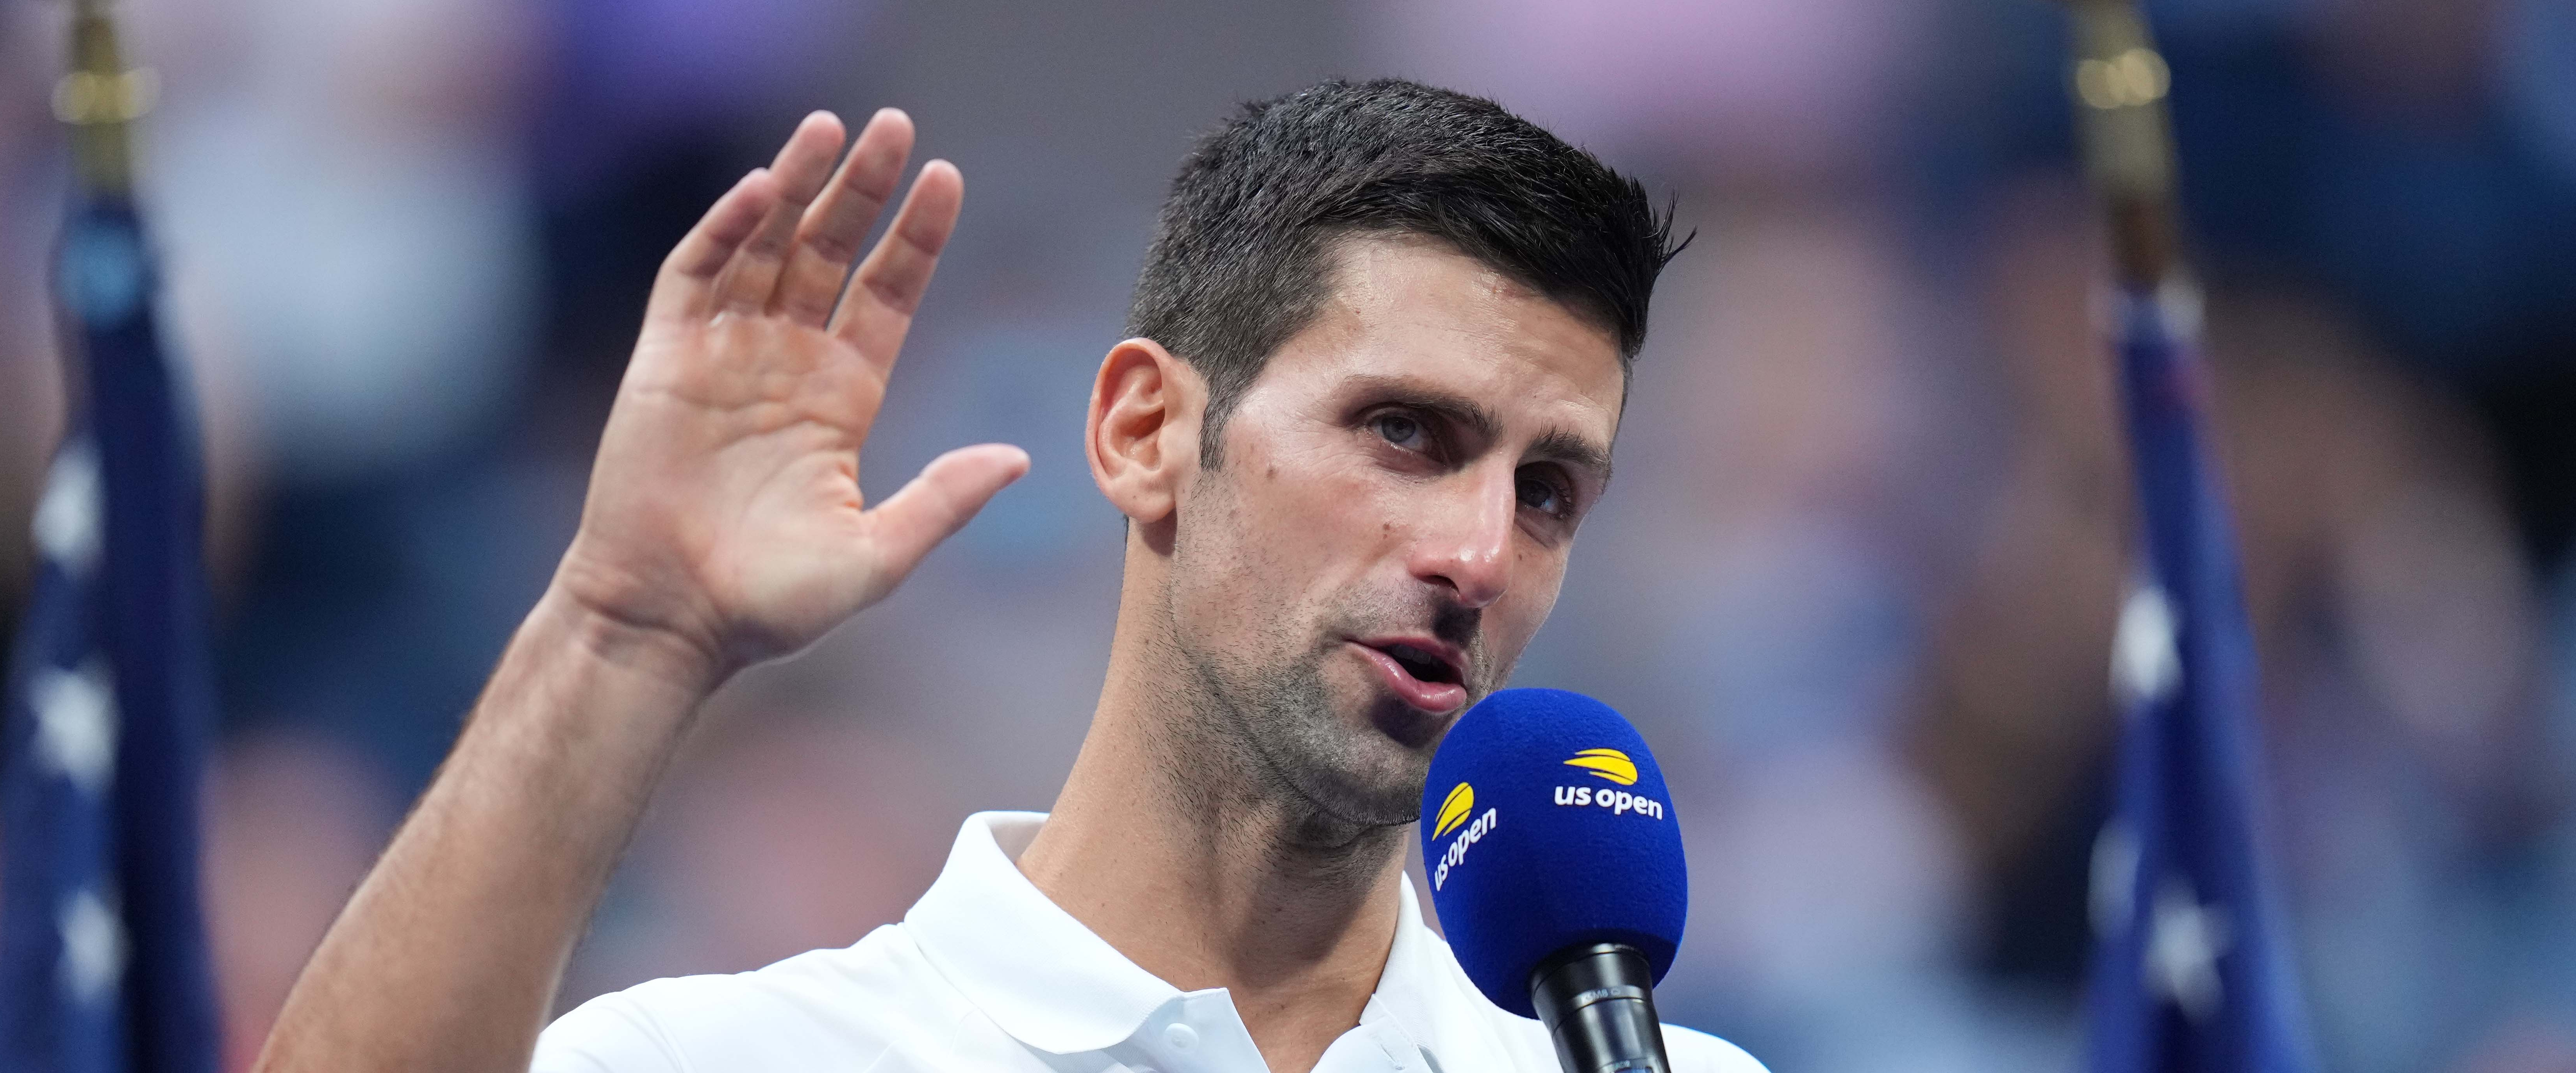 Novak Djokovic RIGHTLY barred from entering Australia!